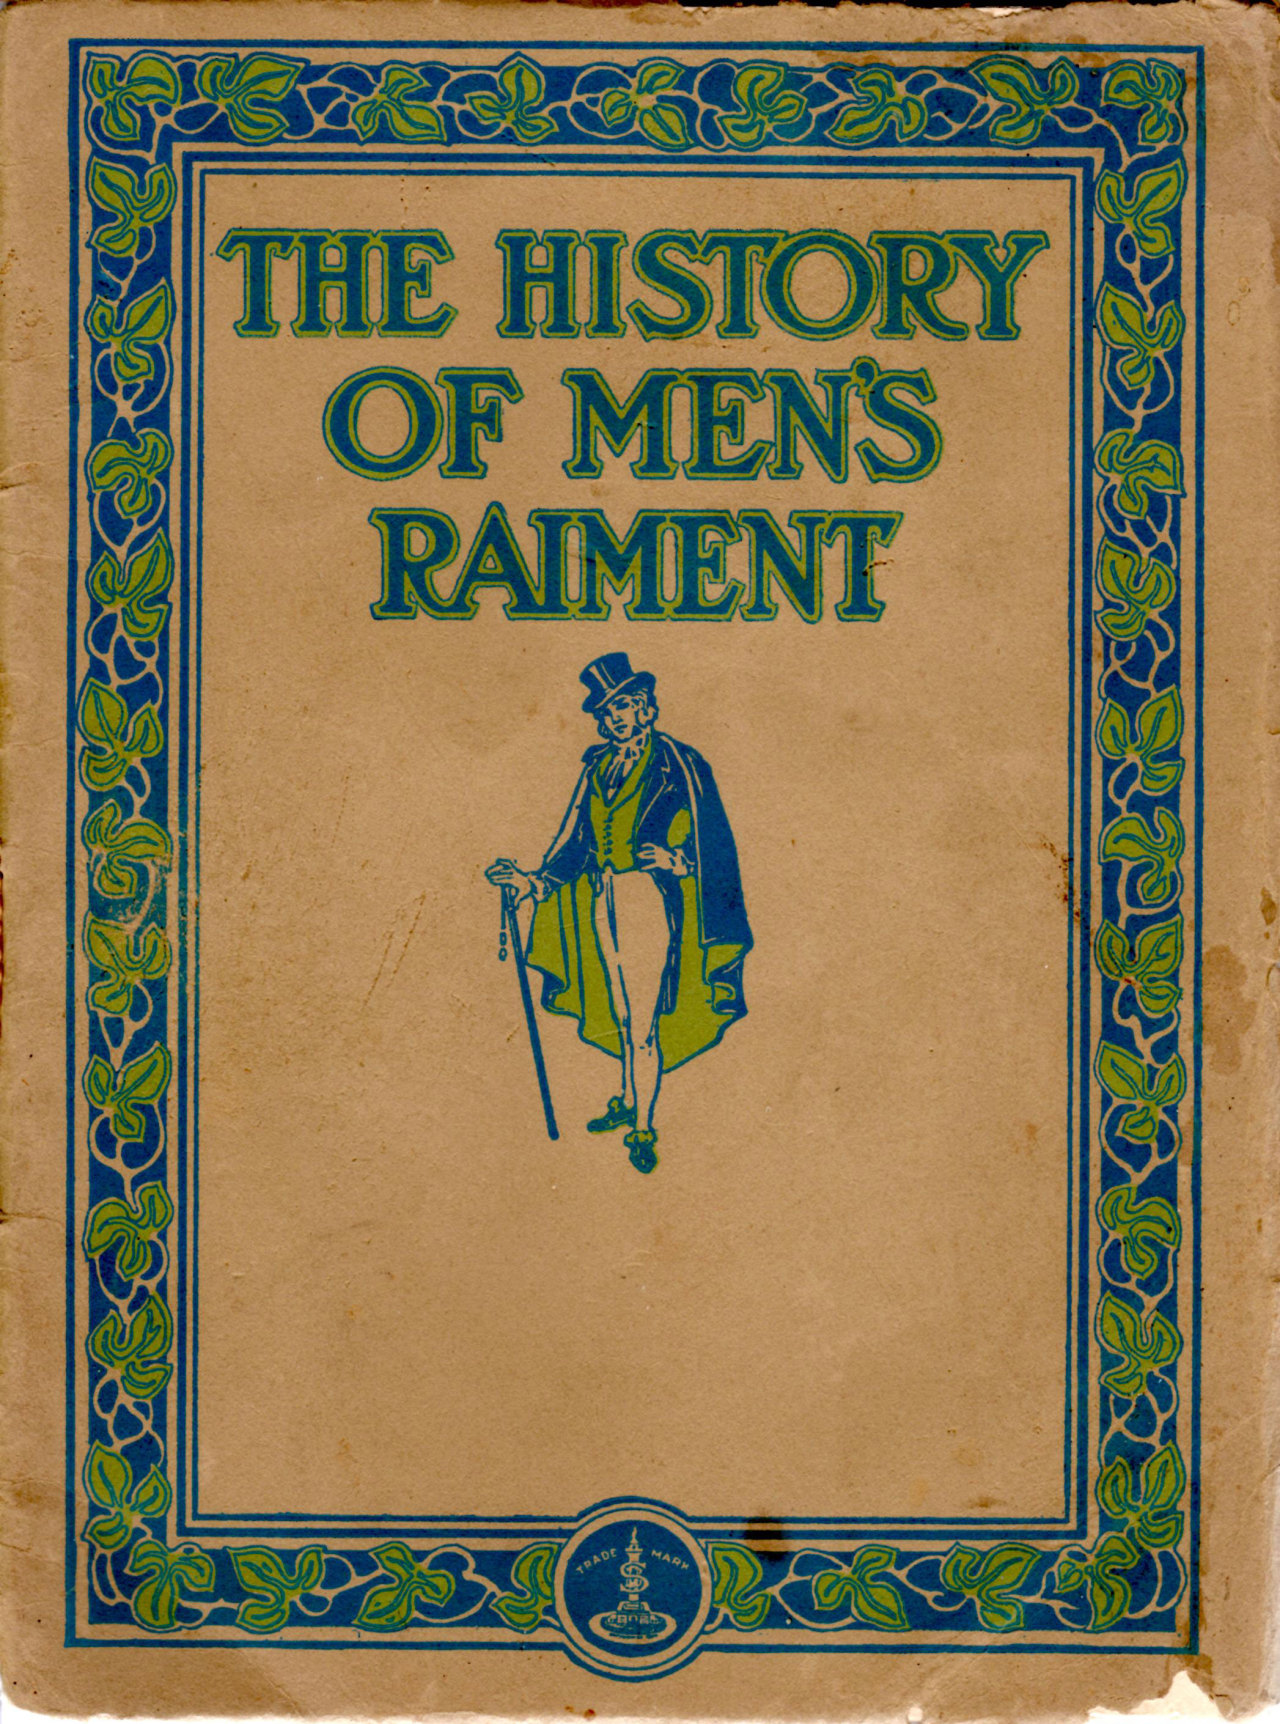 The History of Men’s Raiment